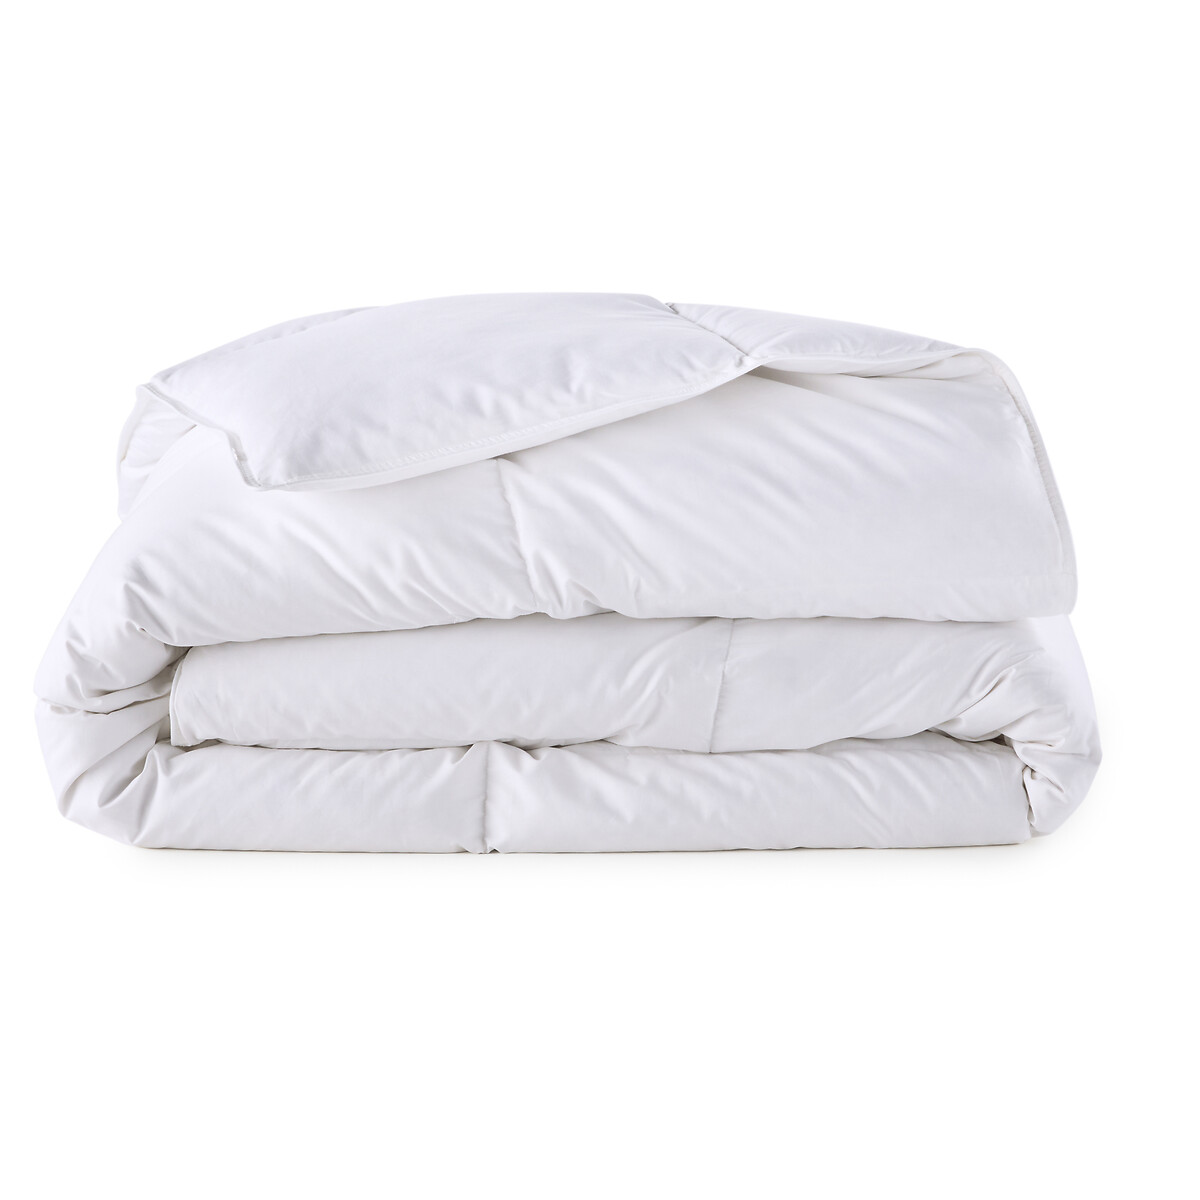 Одеяло La Redoute пуха  гм с обработкой Proneem 260 x 240 см белый, размер 260 x 240 см - фото 2